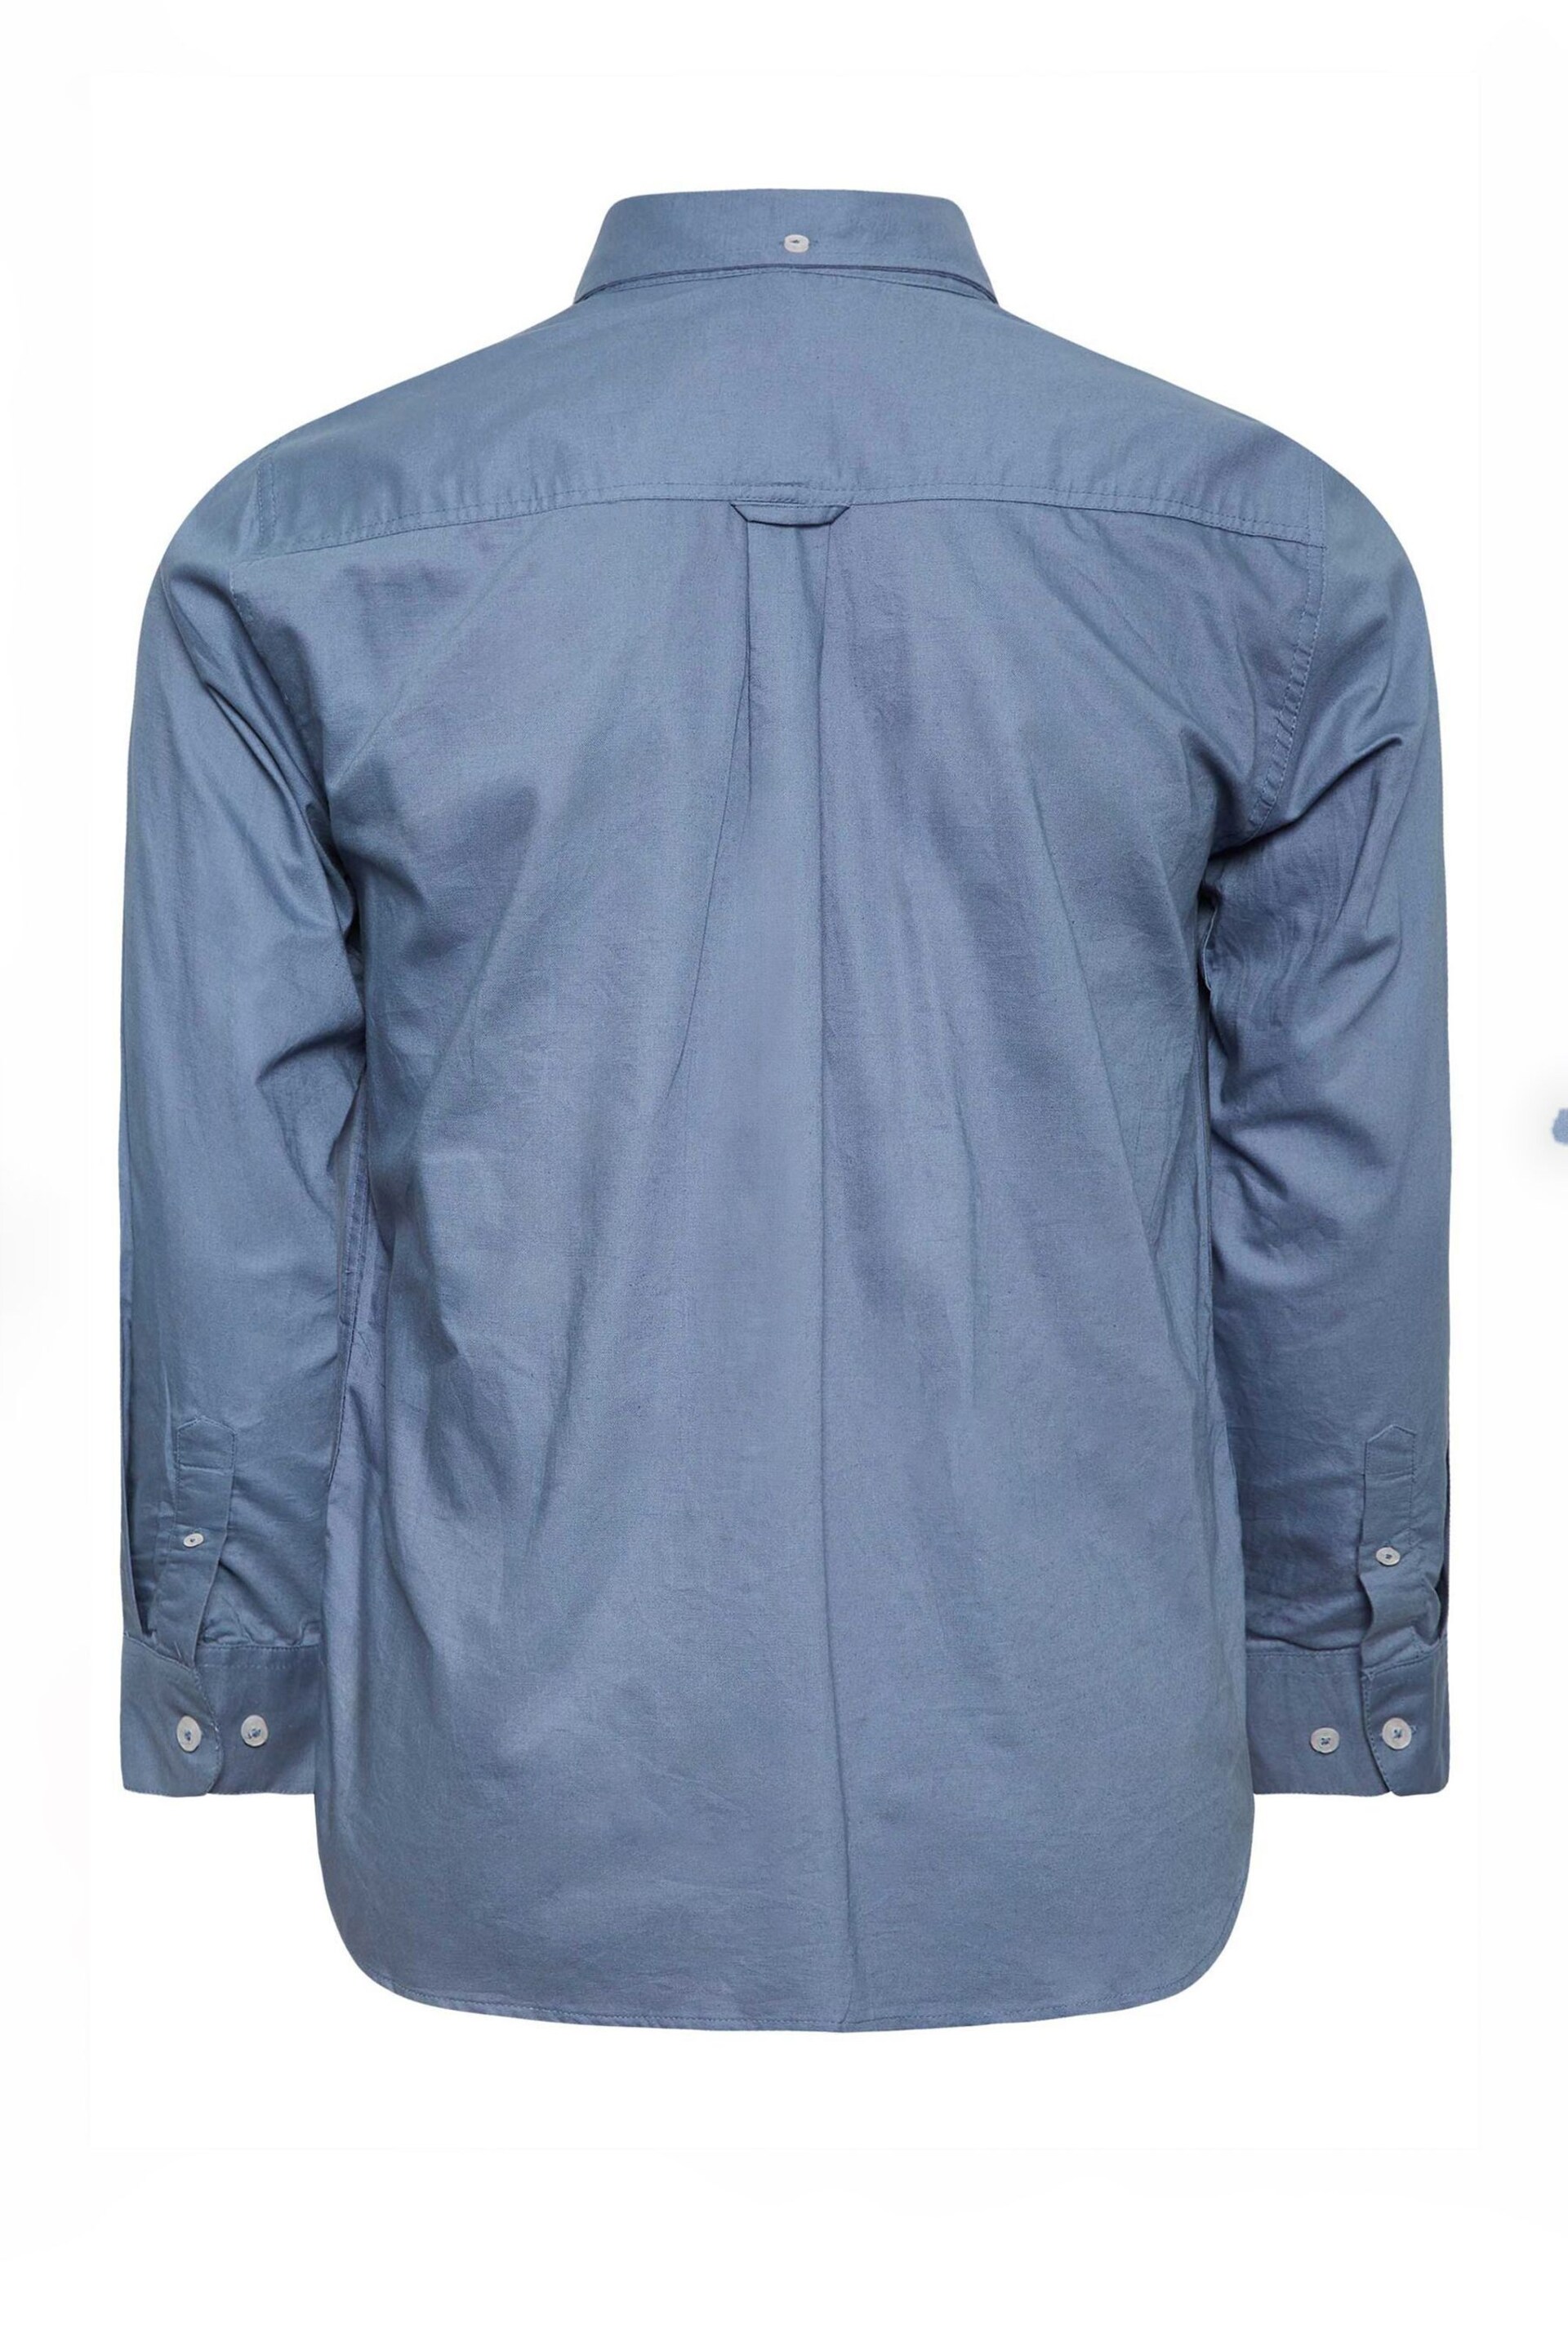 BadRhino Big & Tall Blue Long Sleeve Oxford Shirt - Image 2 of 2